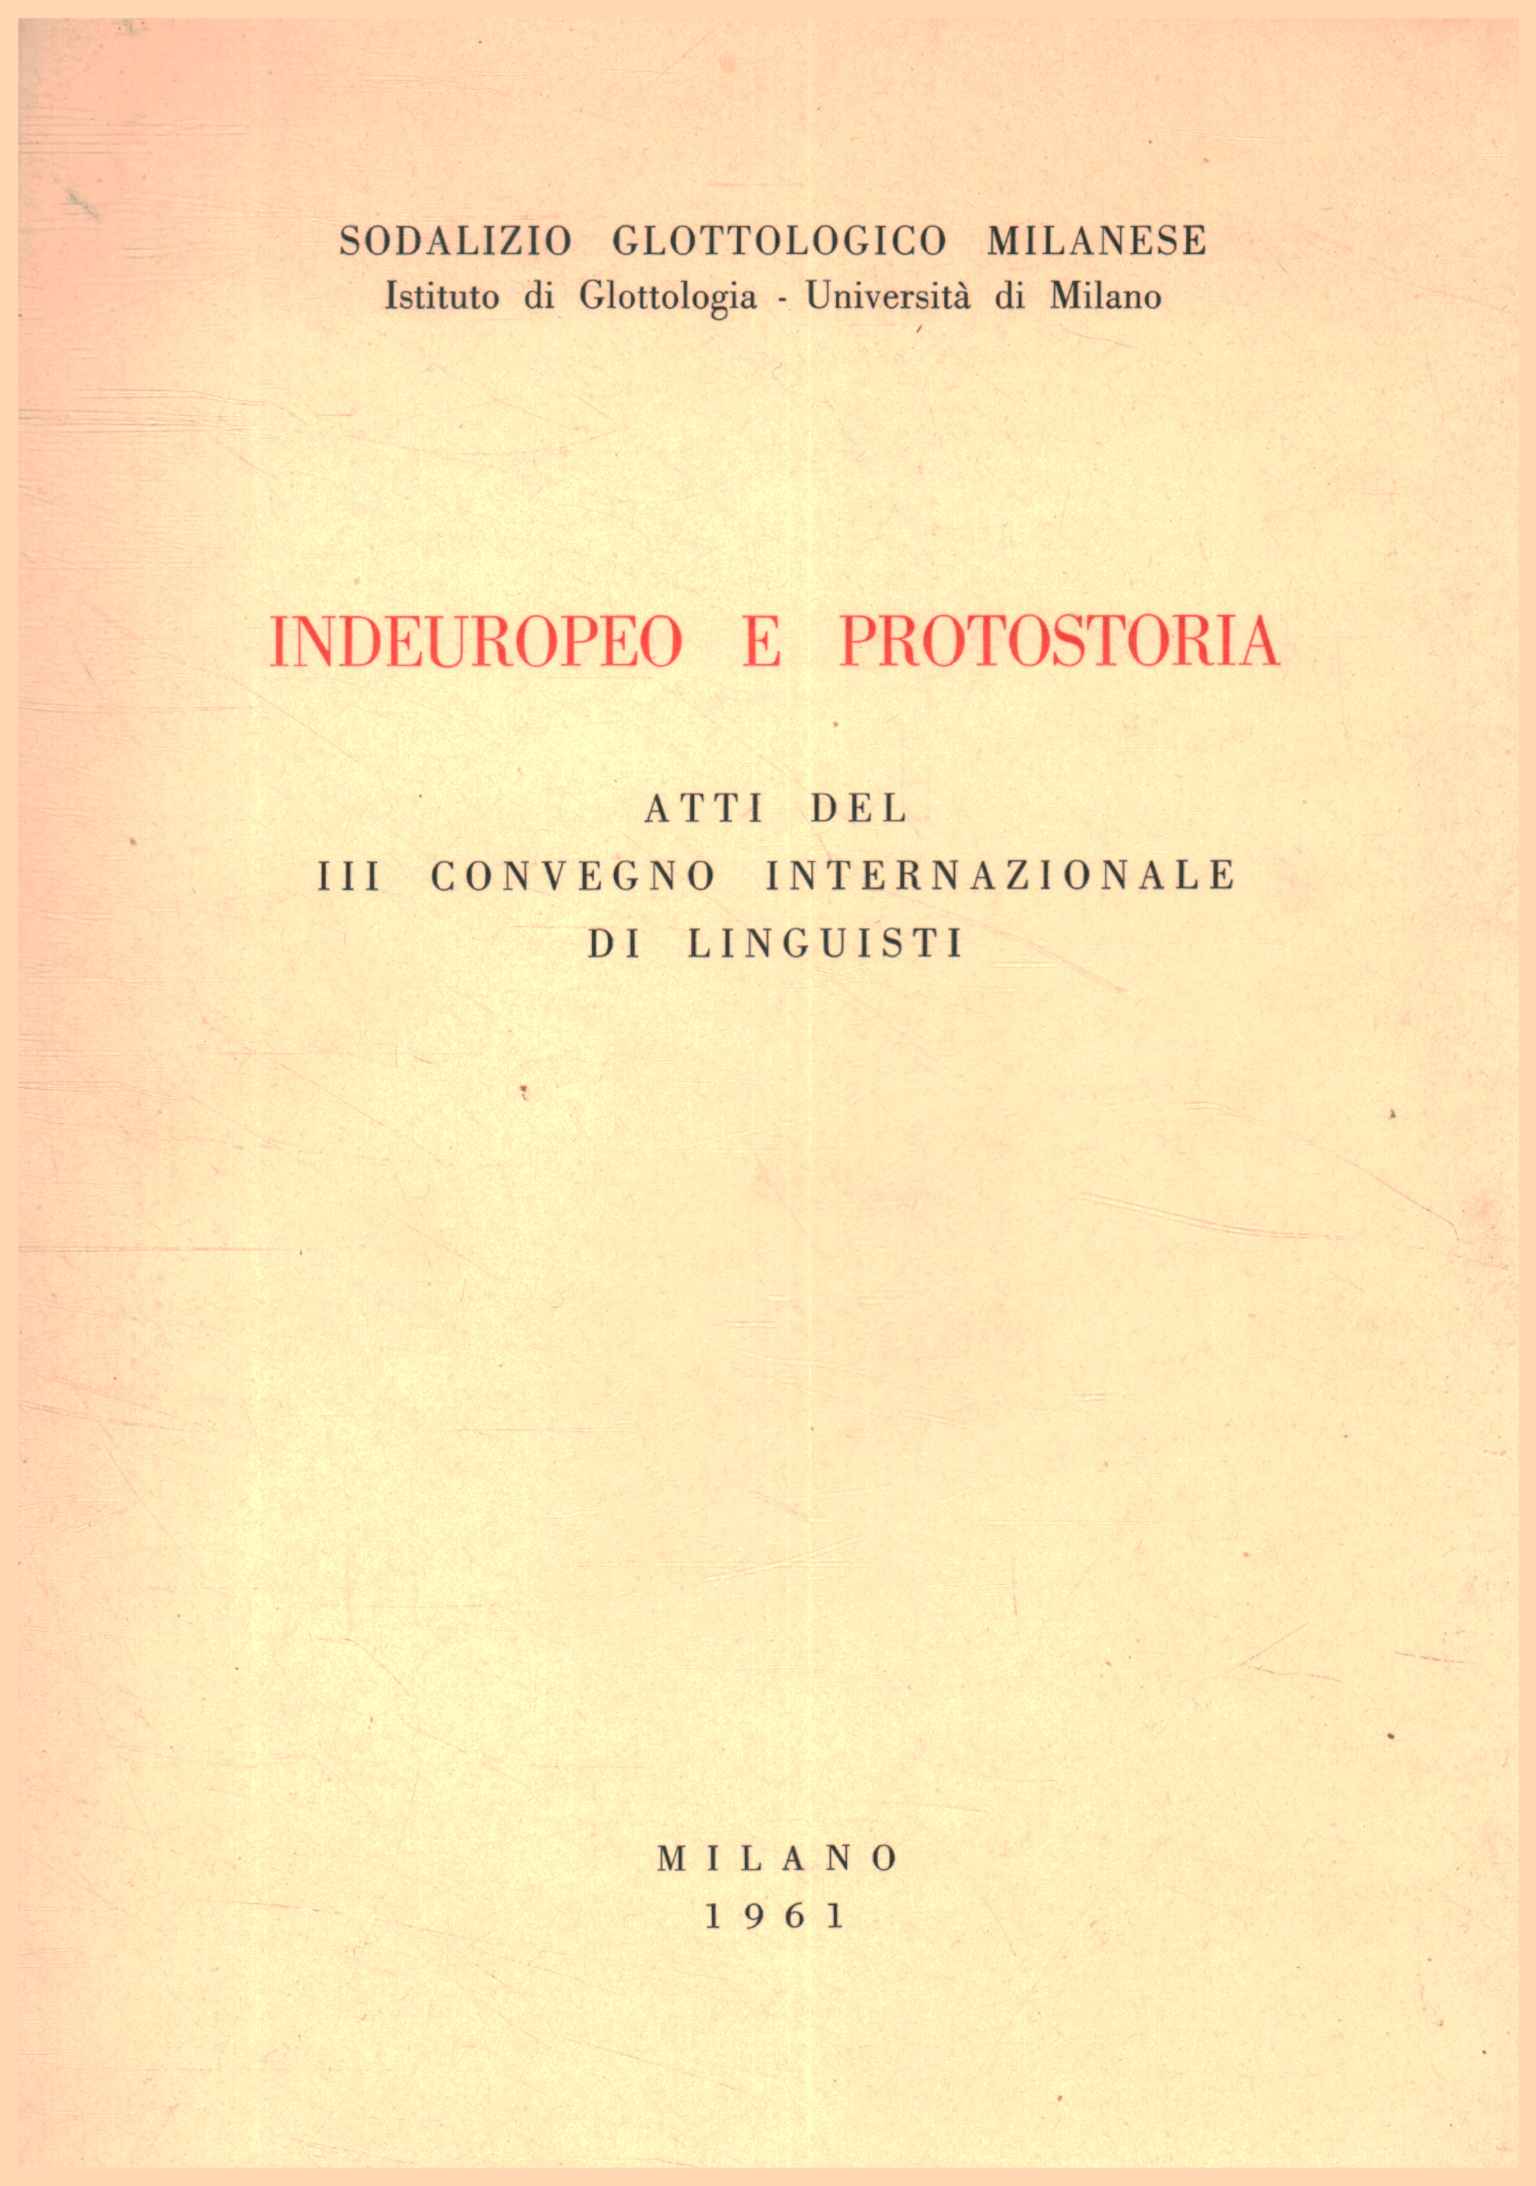 Indo-European and protohistory